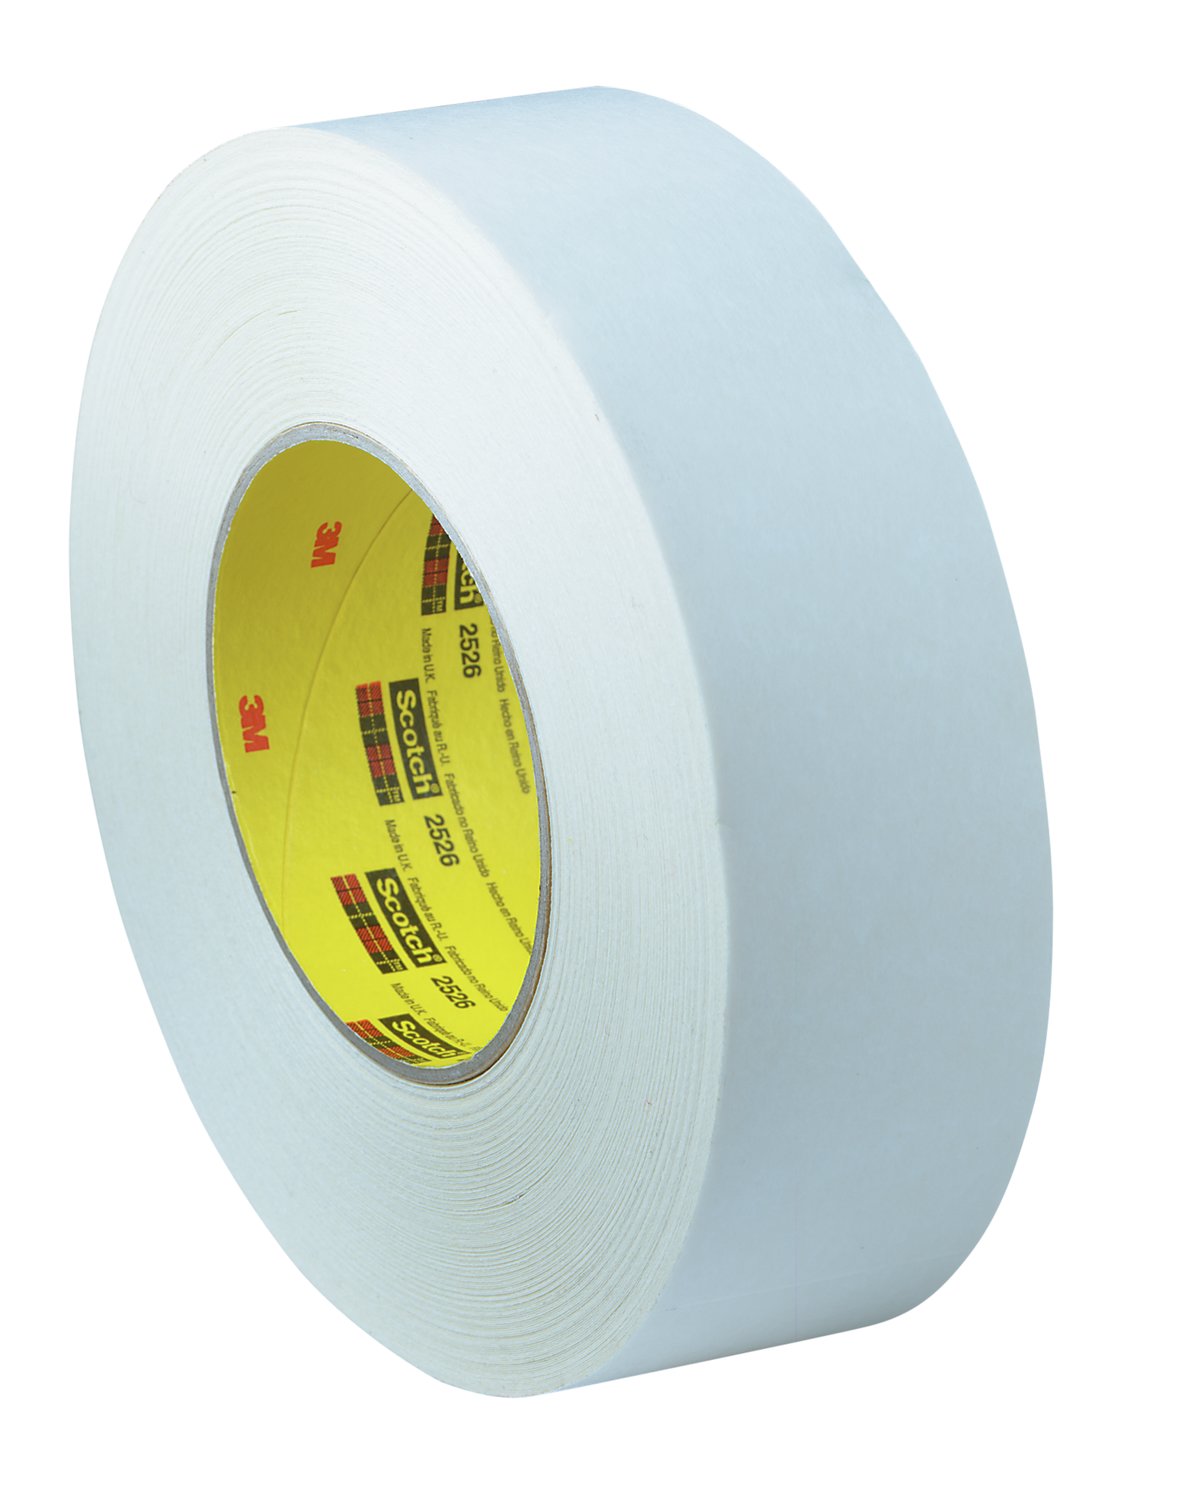 7000088519 - 3M Textile Flatback Tape 2526, White, 24 mm x 55 m, 9.8 mil, 36
Rolls/Case